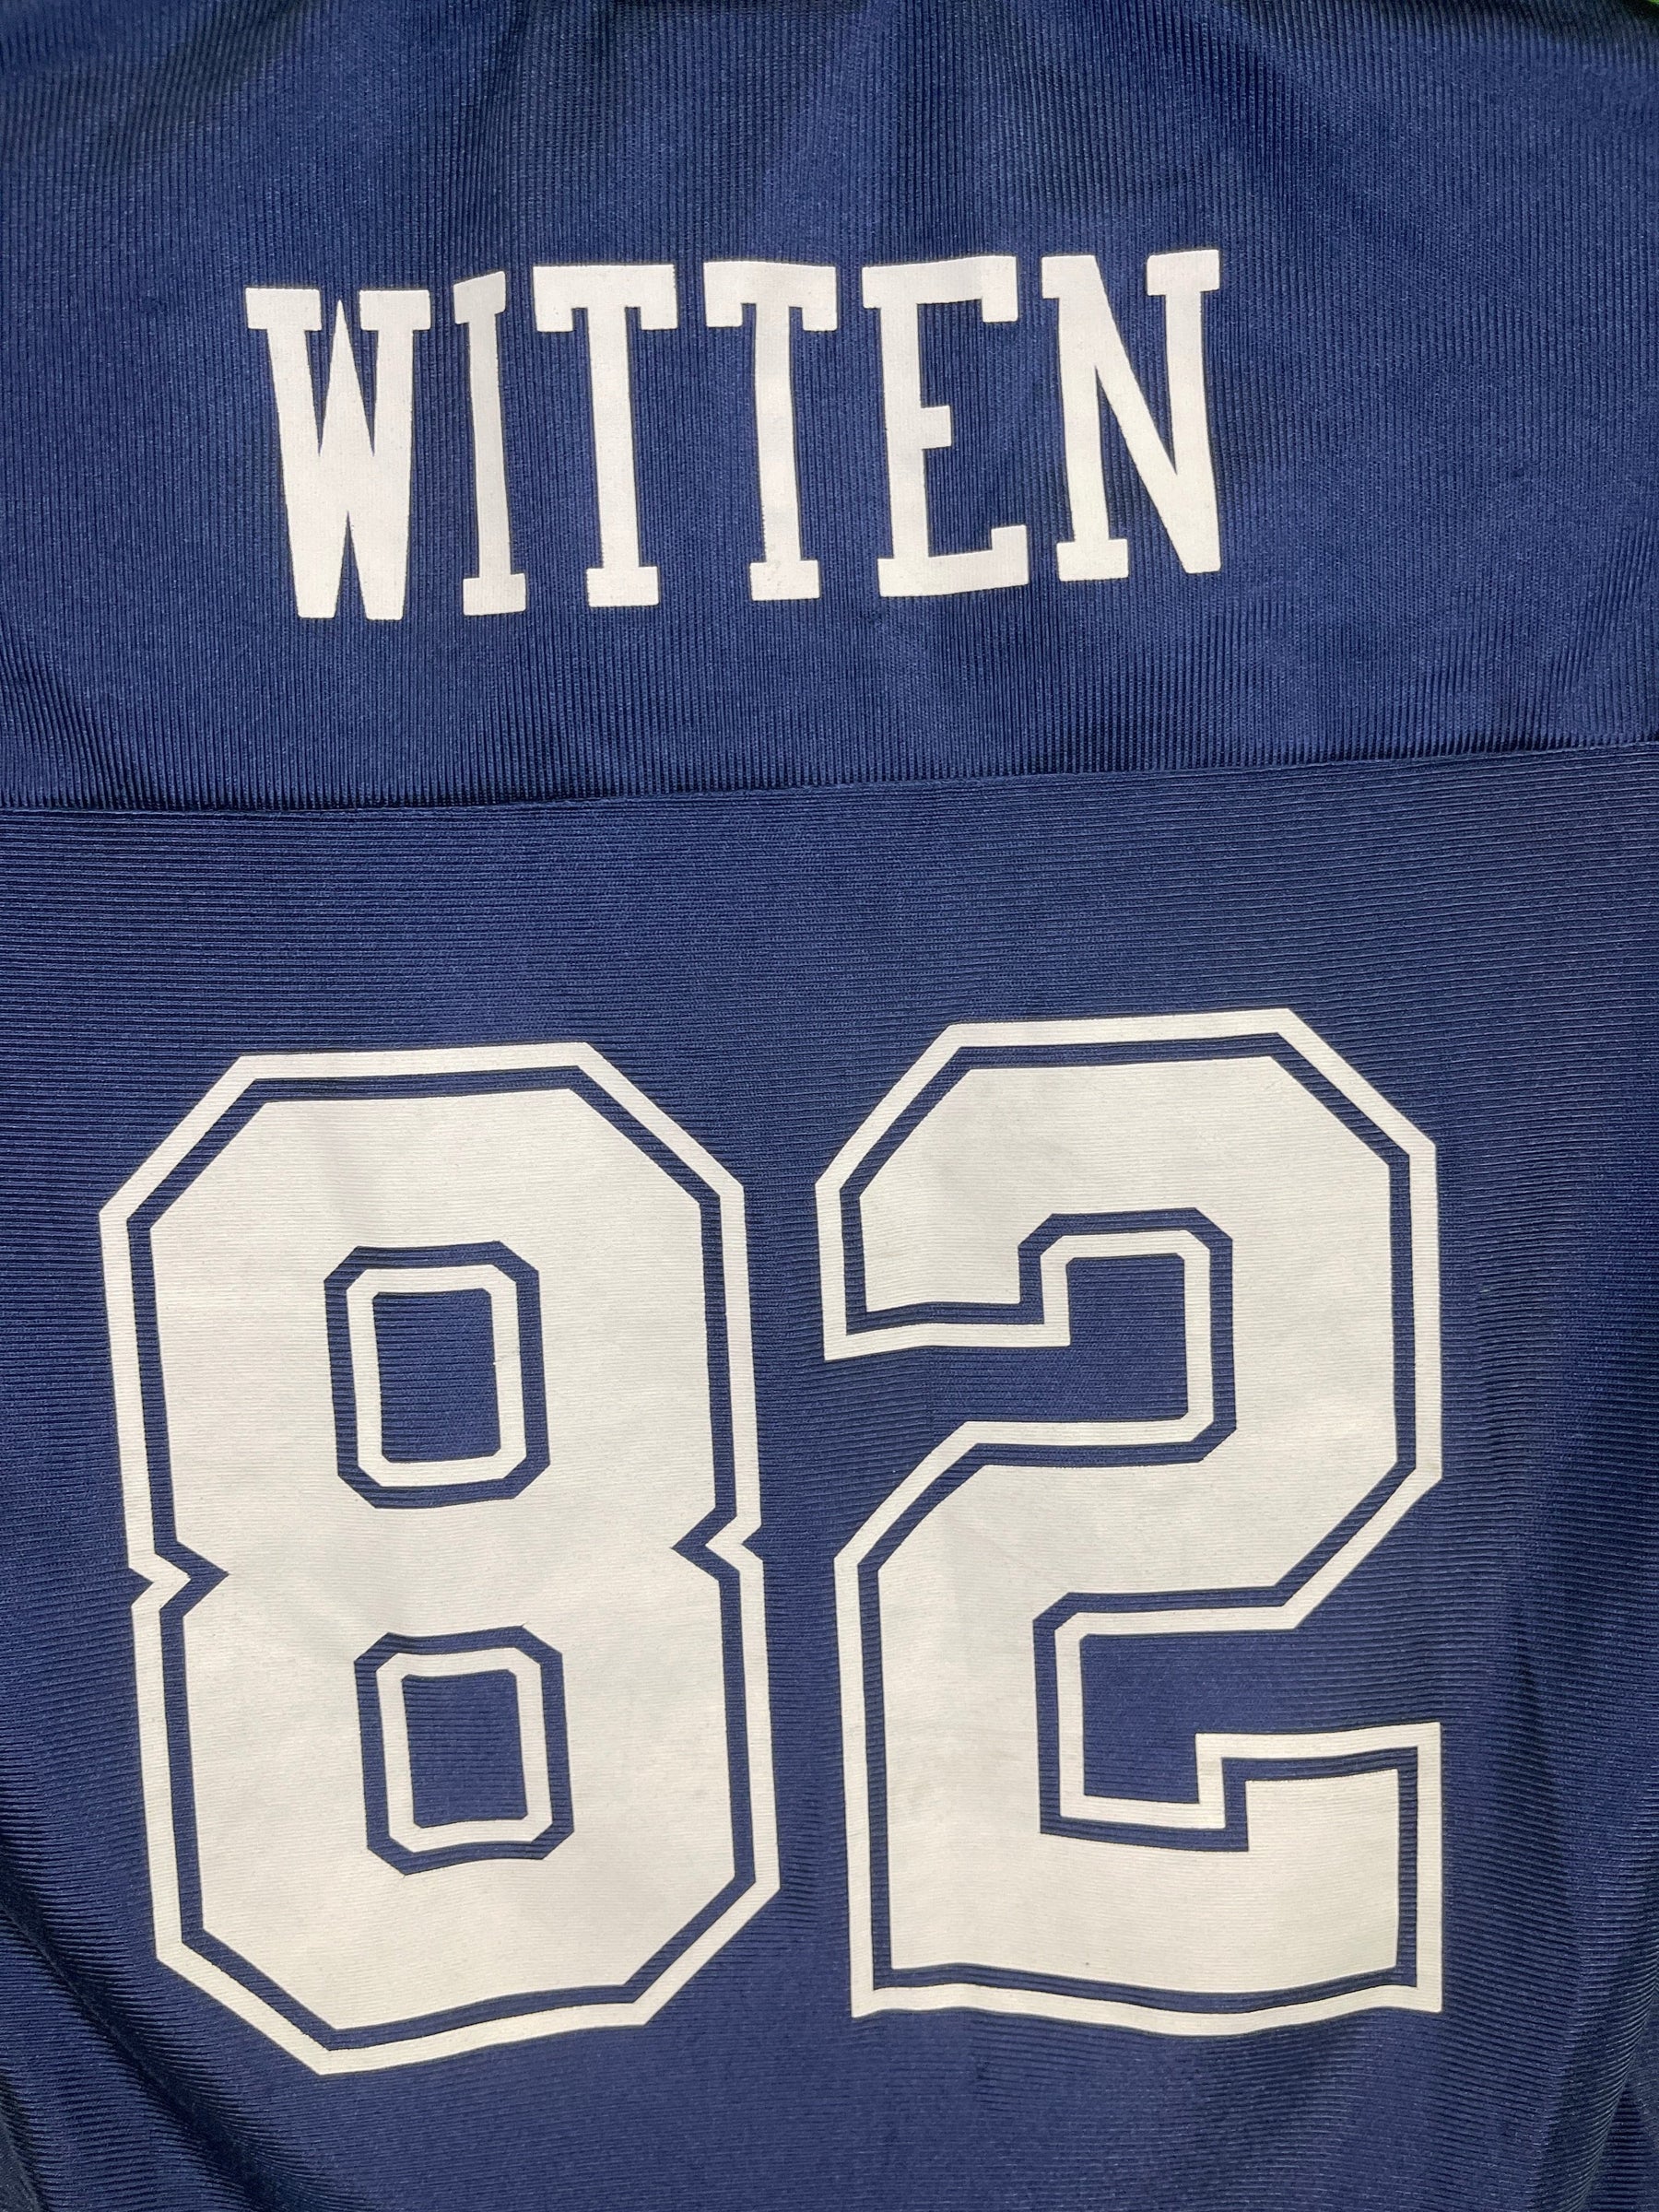 NFL Dallas Cowboys Troy Witten #82 Jersey Youth Medium 8-10